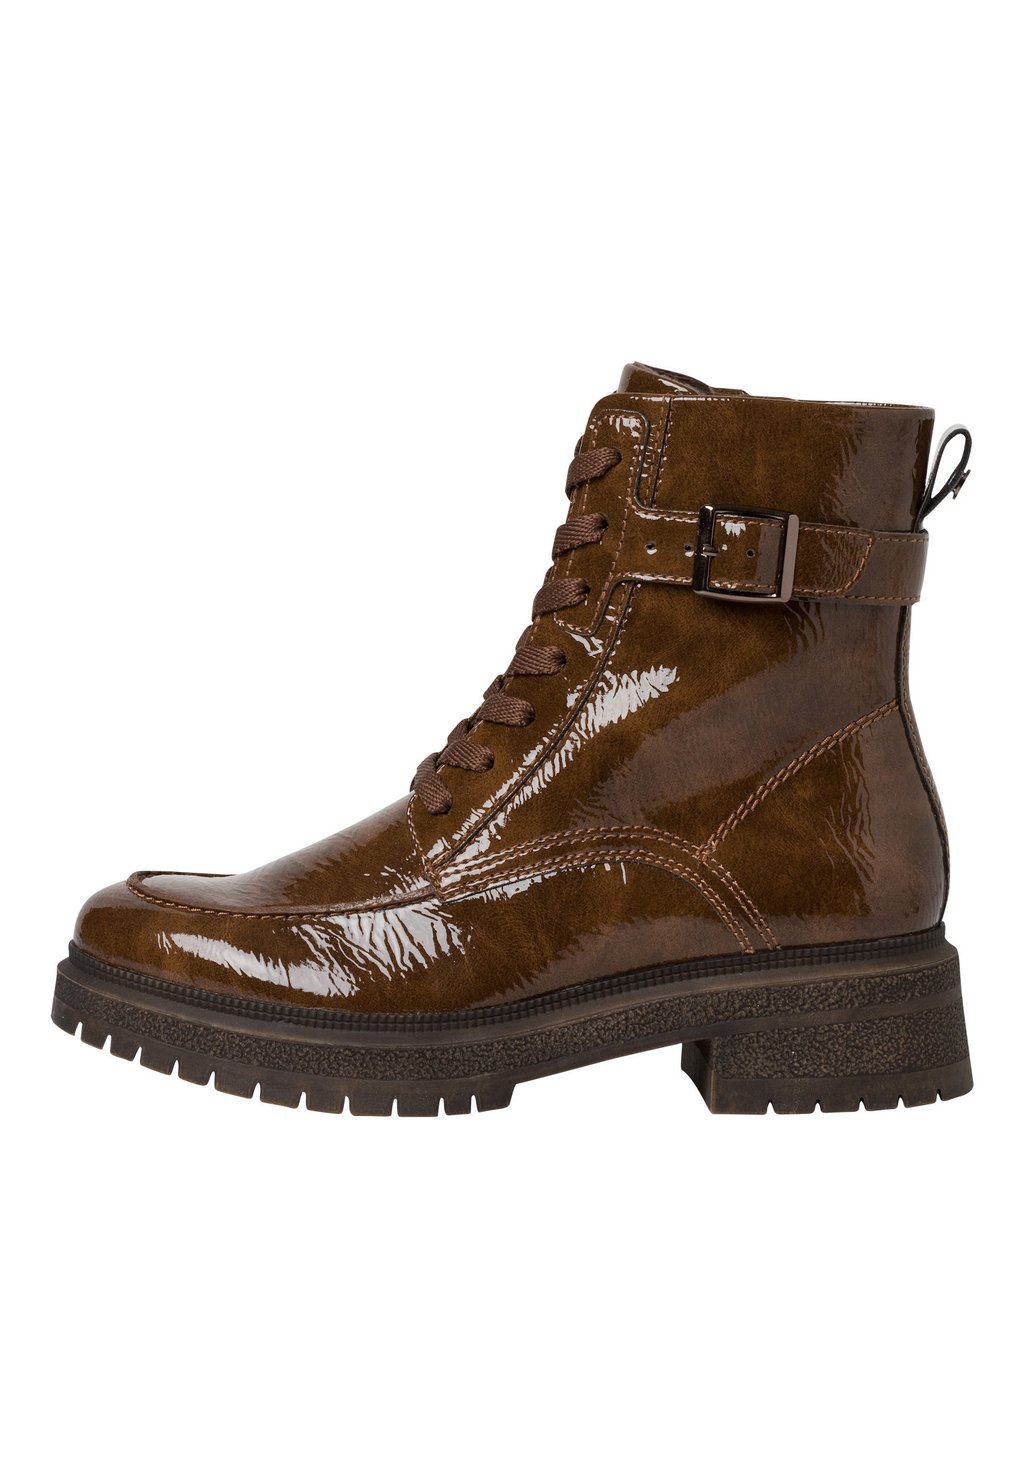 Ботинки на шнуровке Tamaris, коричневый ботинки на шнурках женские tamaris коричневый 40